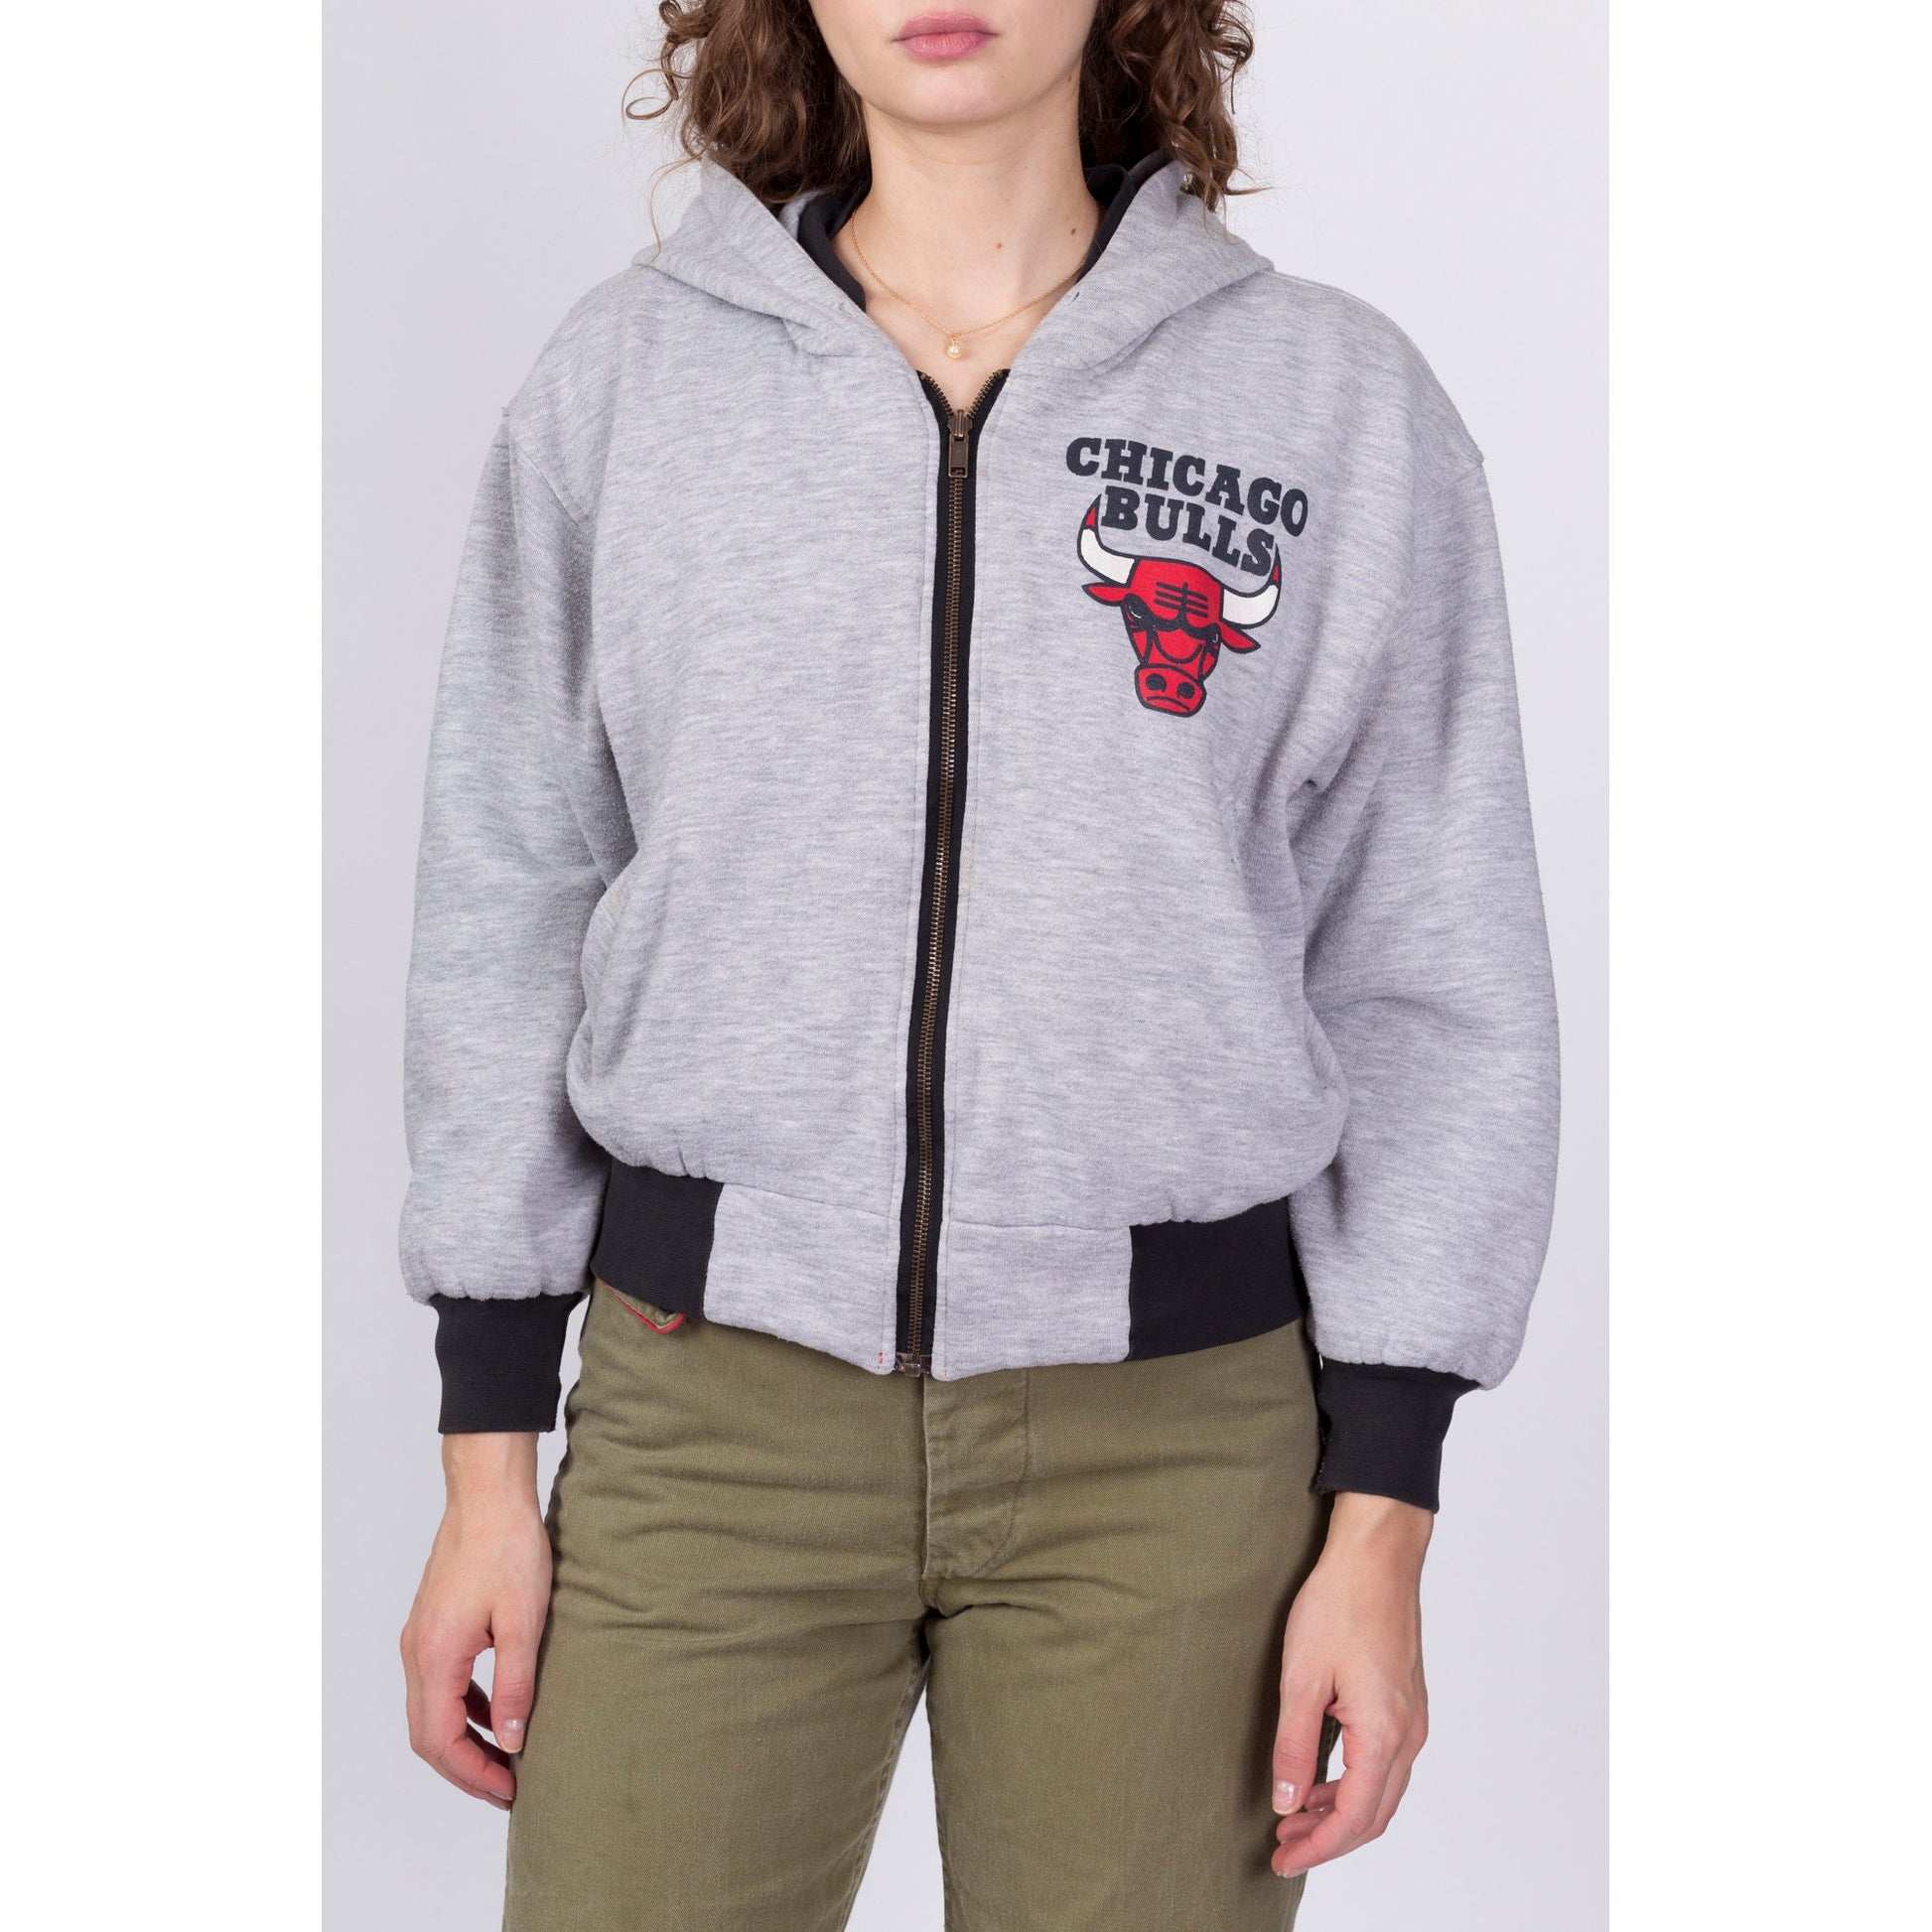 Chicago Bulls Vintage Crewneck Sweatshirt Jacket Vintage, Men's